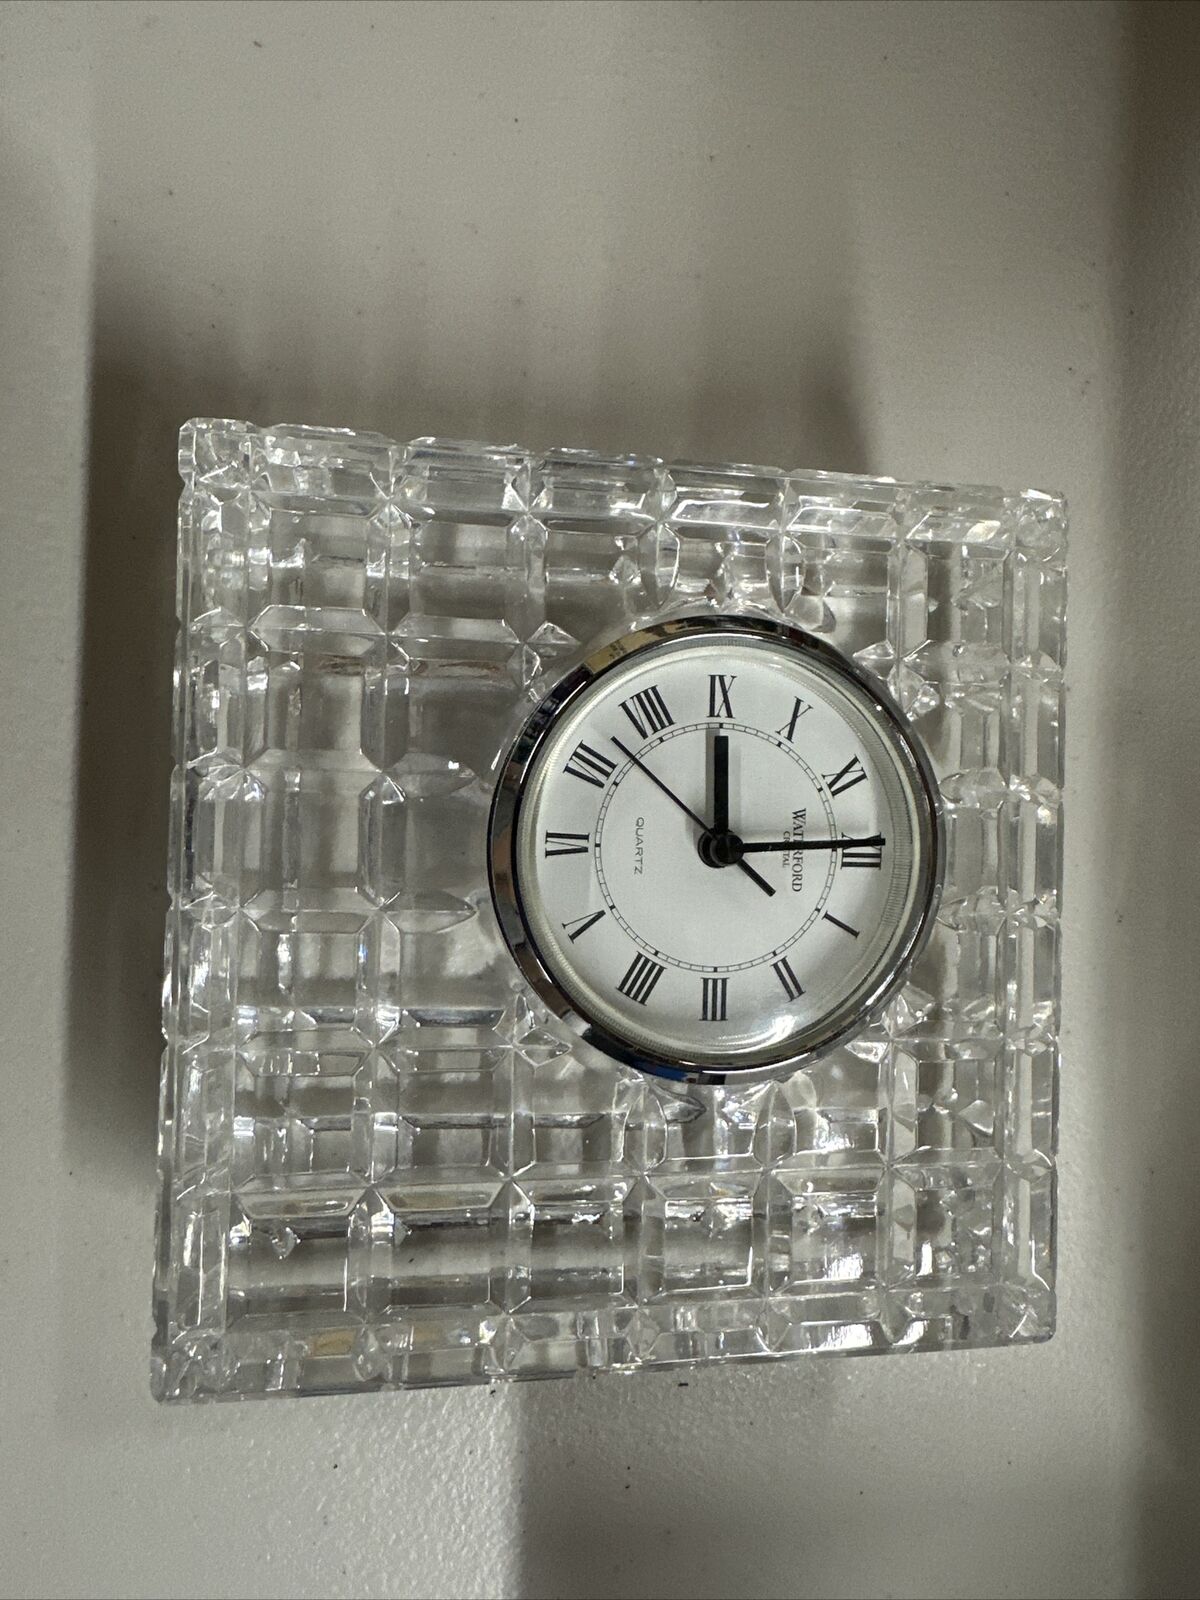 Waterford Crystal Large Square Offset Quartz Desk Table Mantel Clock -